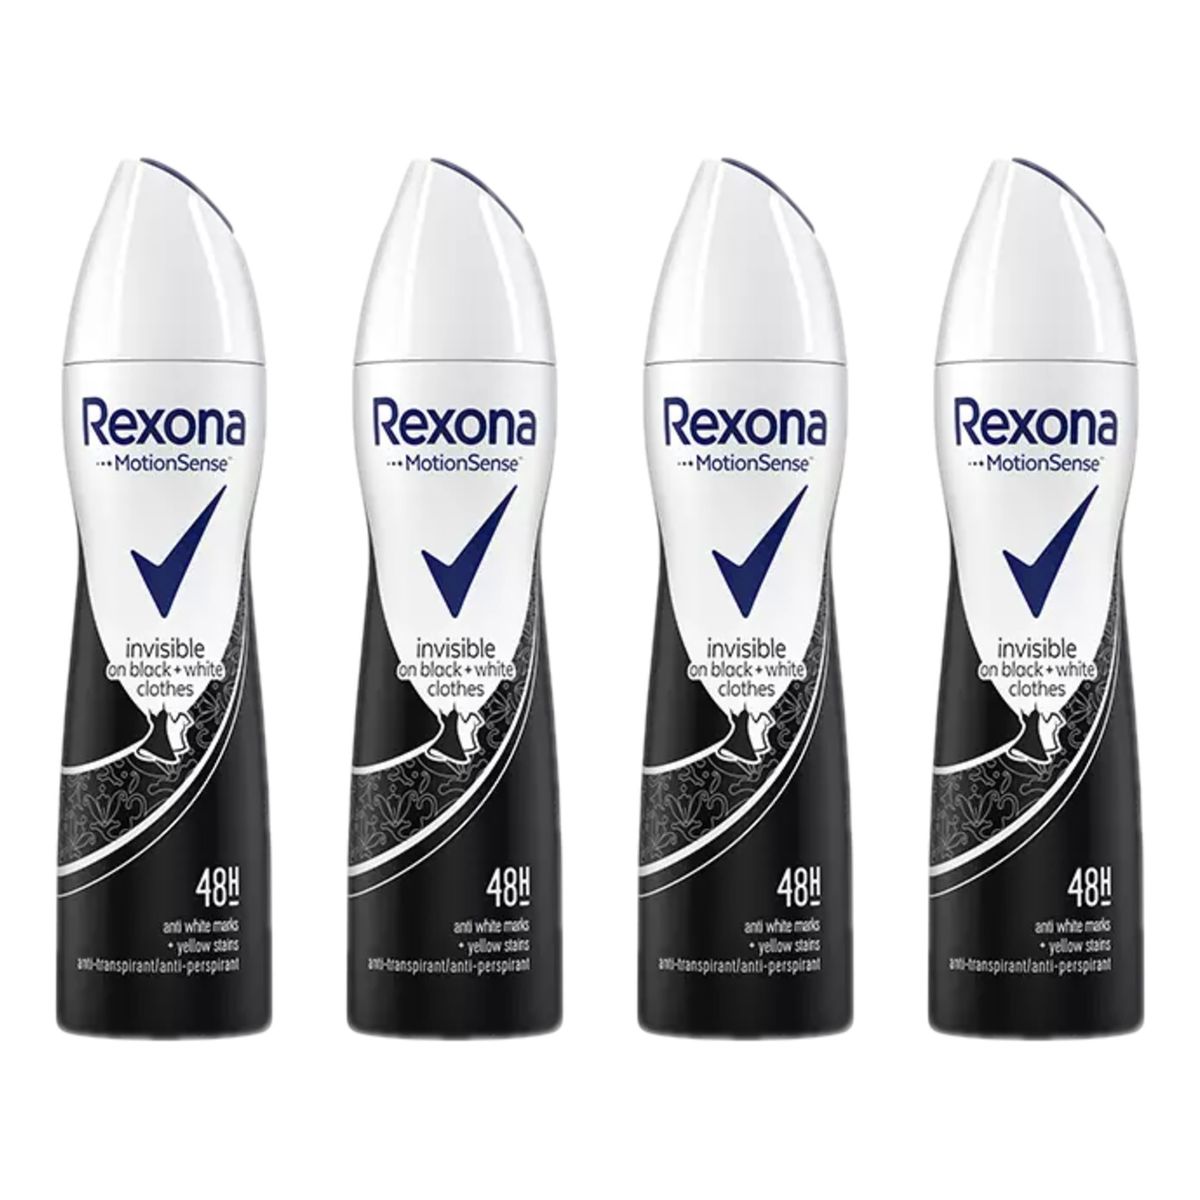 Rexona Invisible on black and white clothes Antyperspirant w sprayu dla kobiet 4x150ml